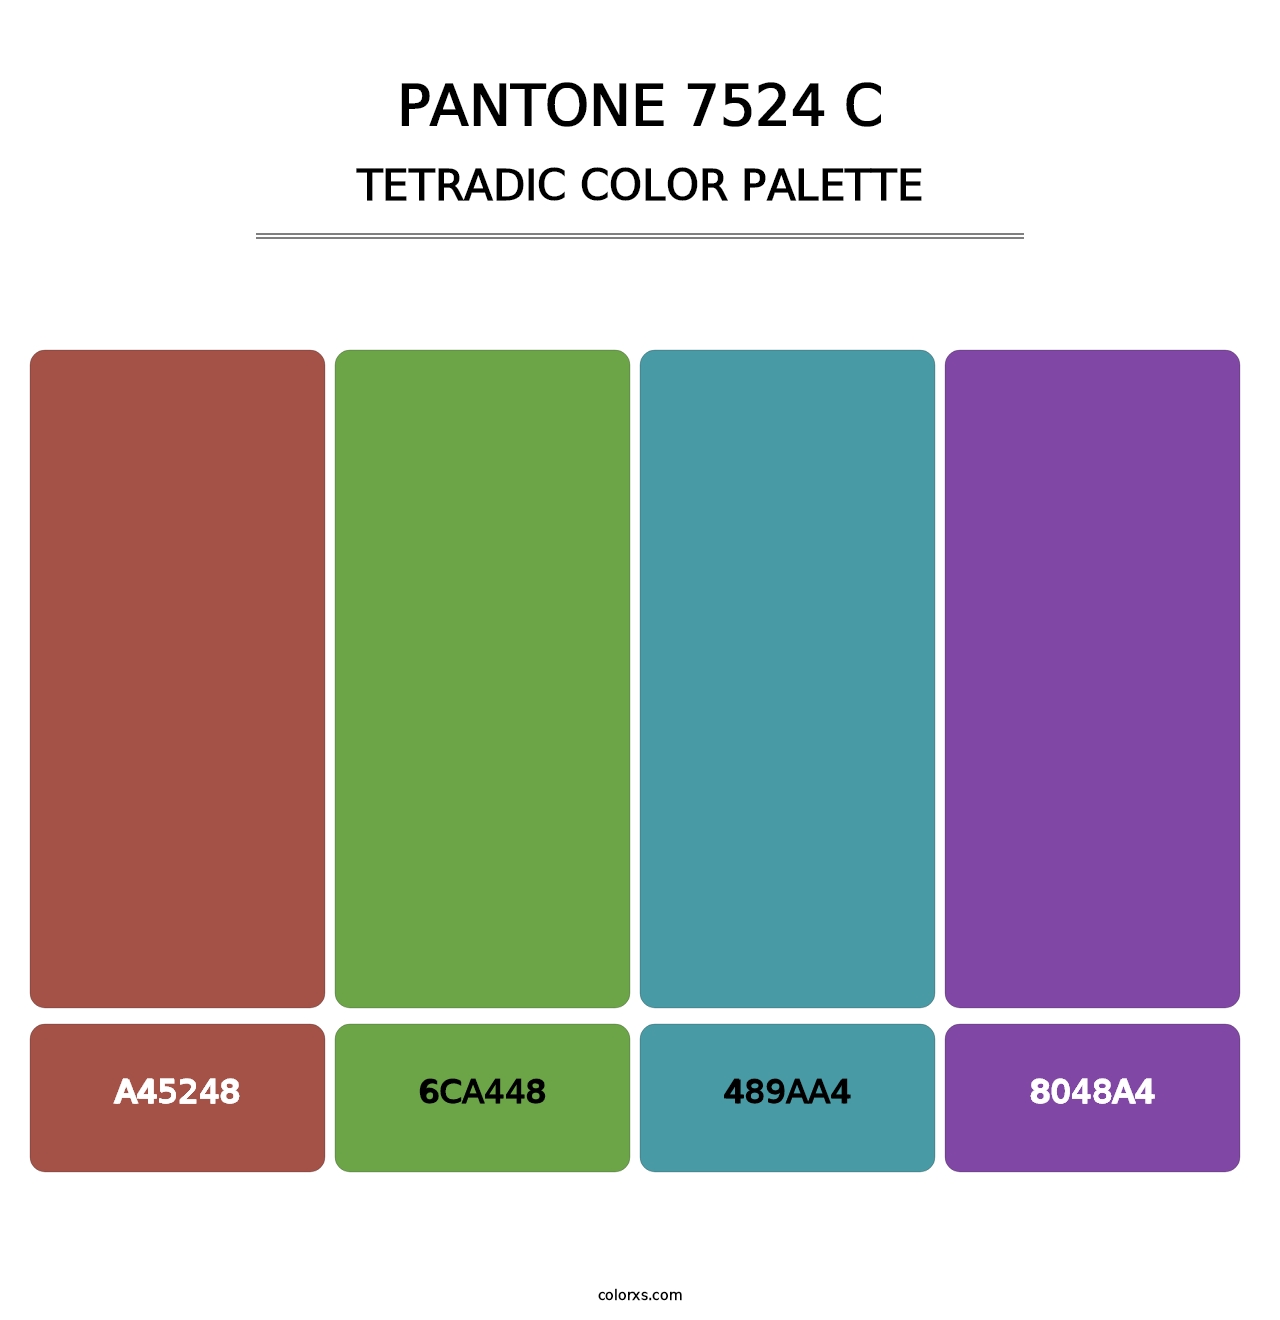 PANTONE 7524 C - Tetradic Color Palette